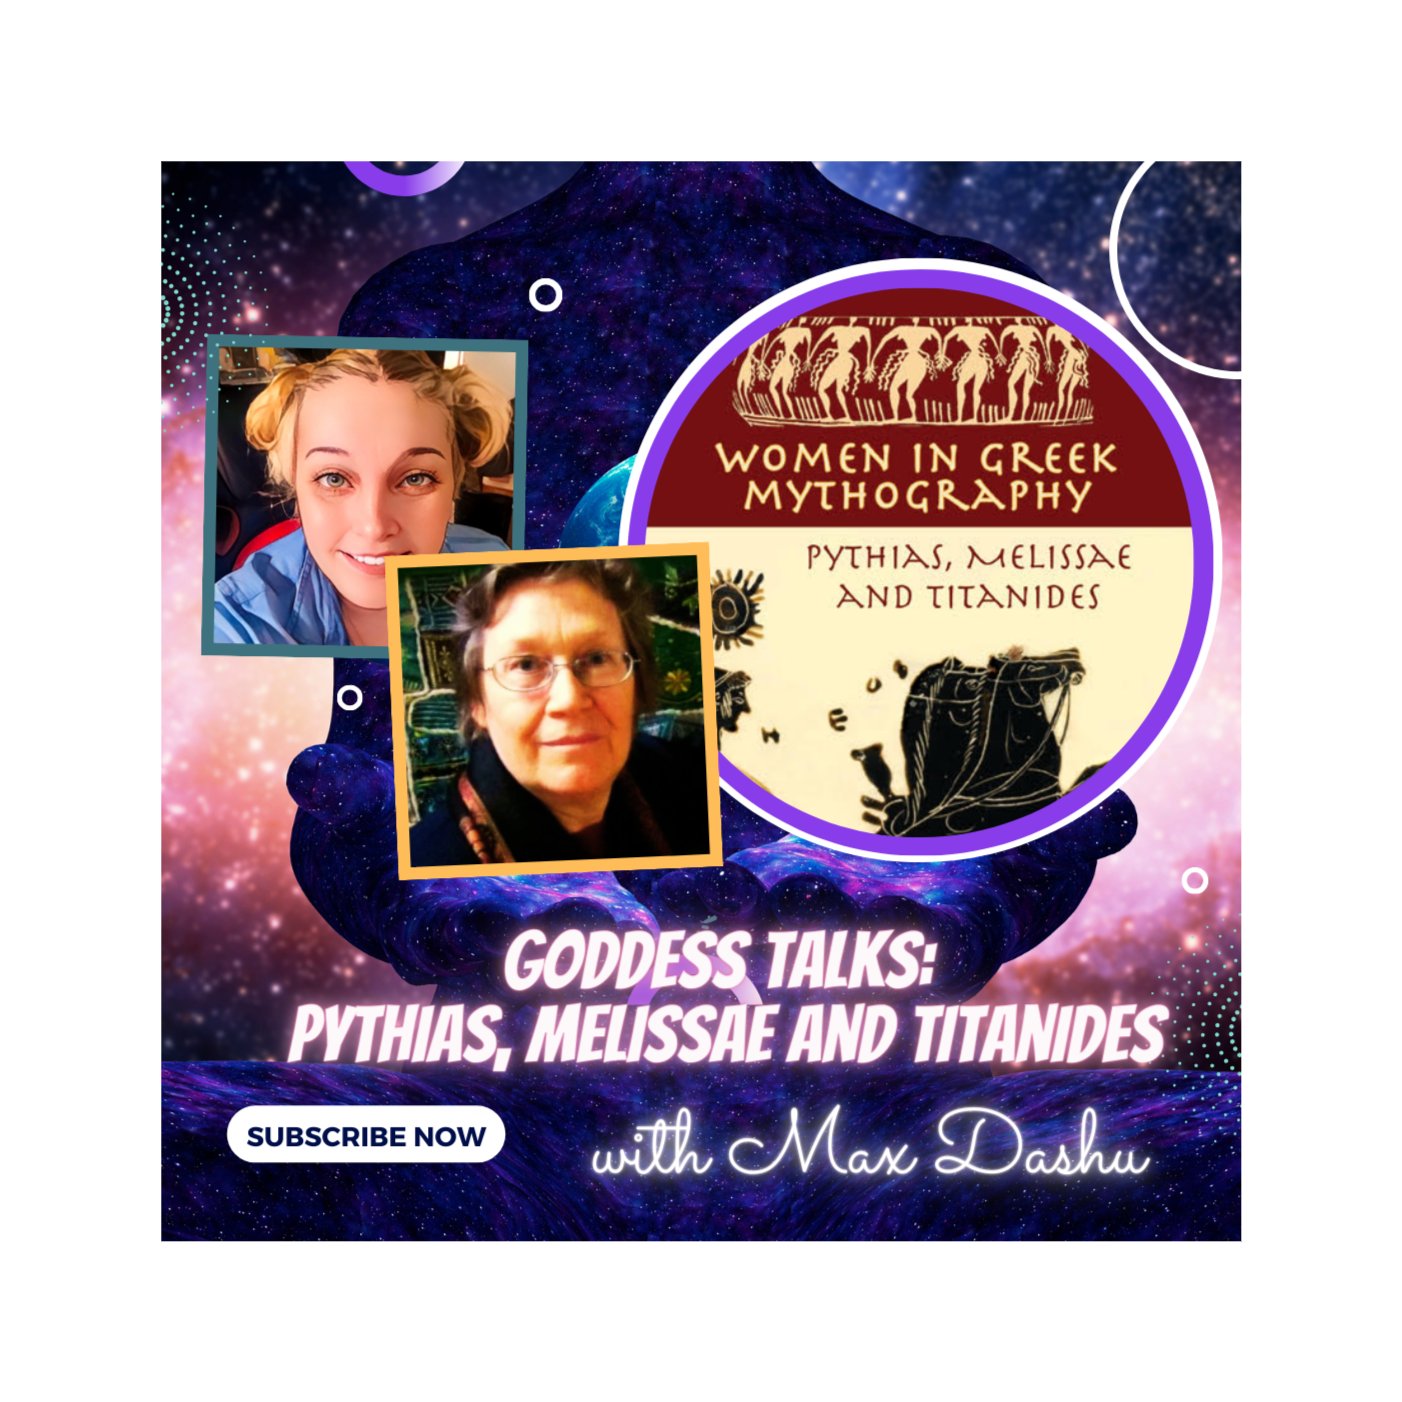 Goddess Talks: Pythias, Melissae and Titanides - with Max Dashu